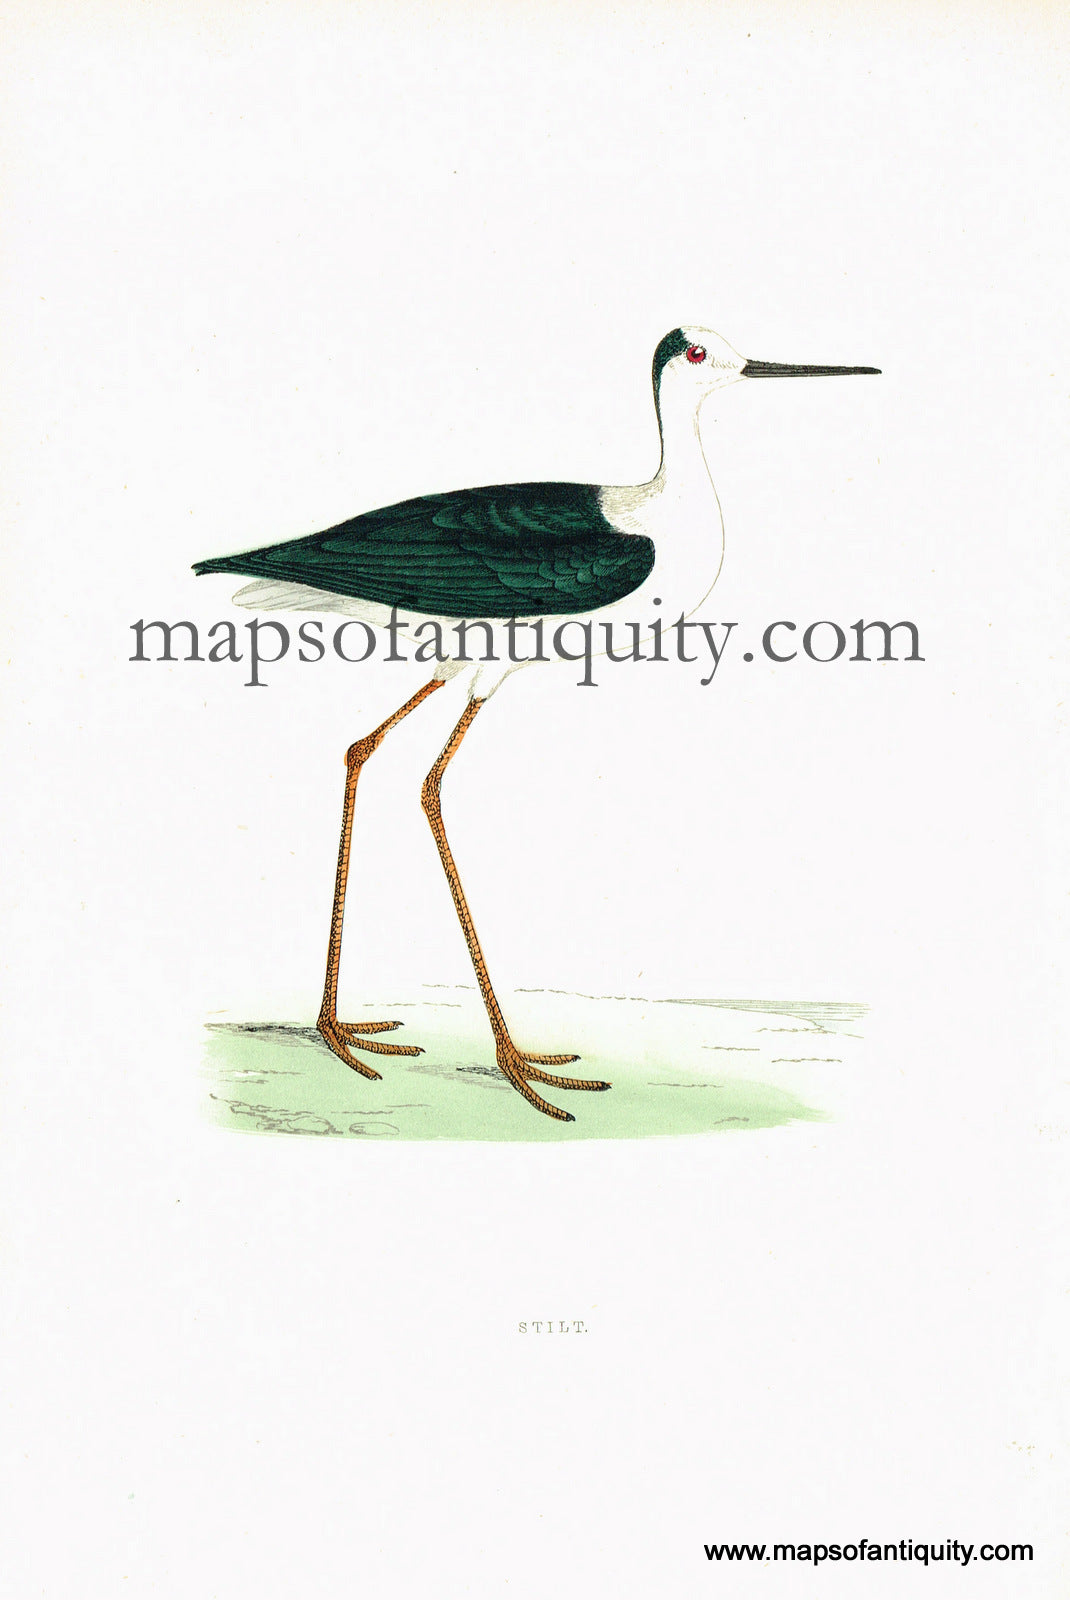 Antique-Hand-Colored-Engraved-Illustration-Stilt-Antique-Prints-Natural-History-Birds-c.-1880-Morris-Maps-Of-Antiquity